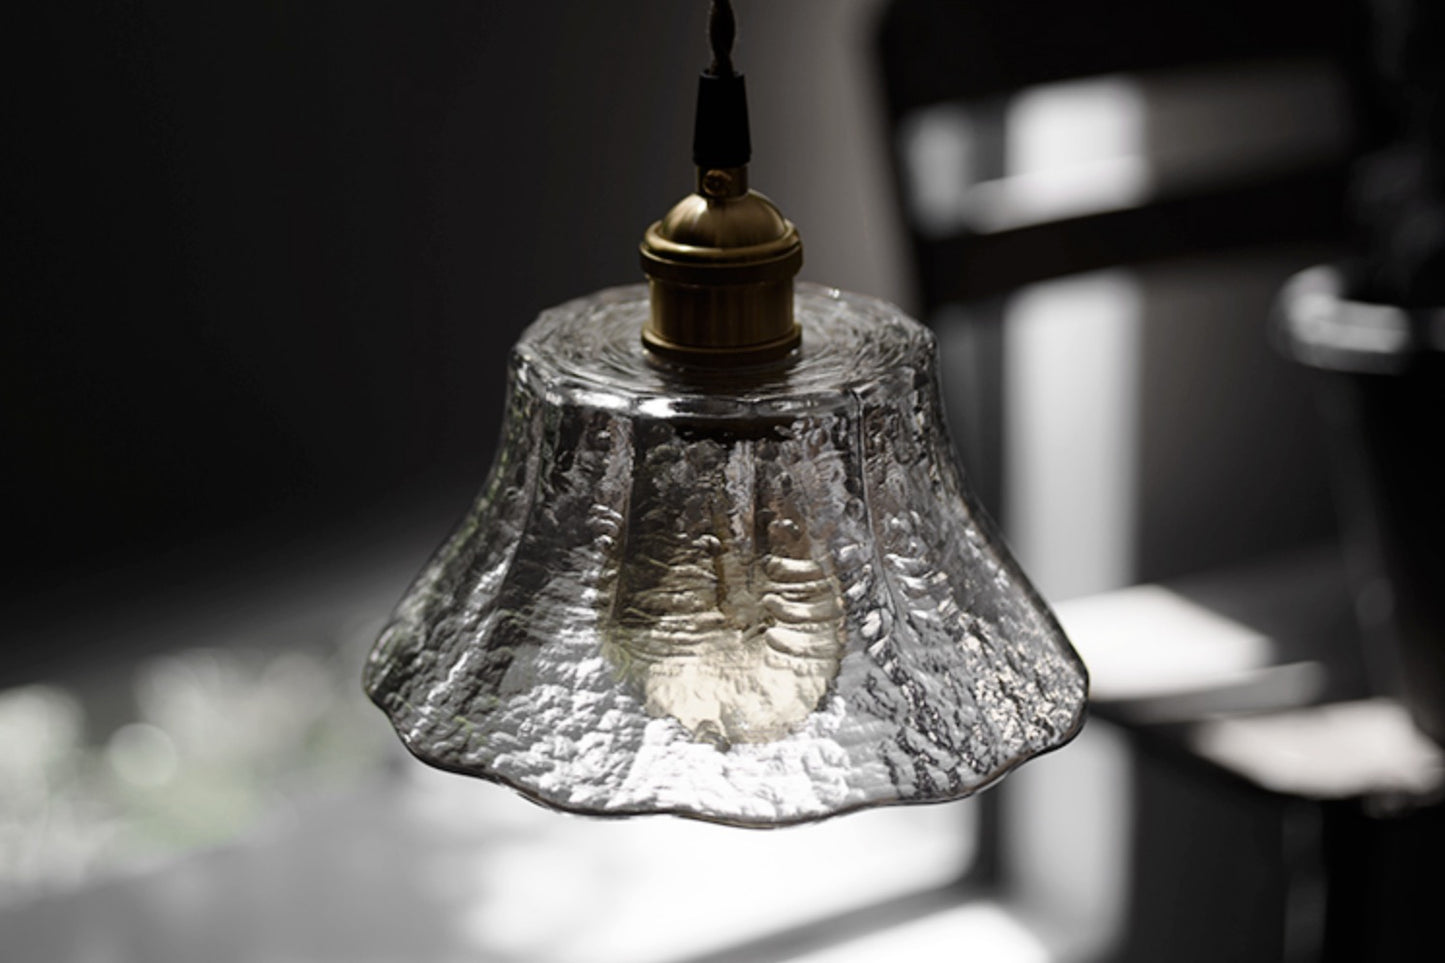 Petunia glass mid century pendant light - model A details